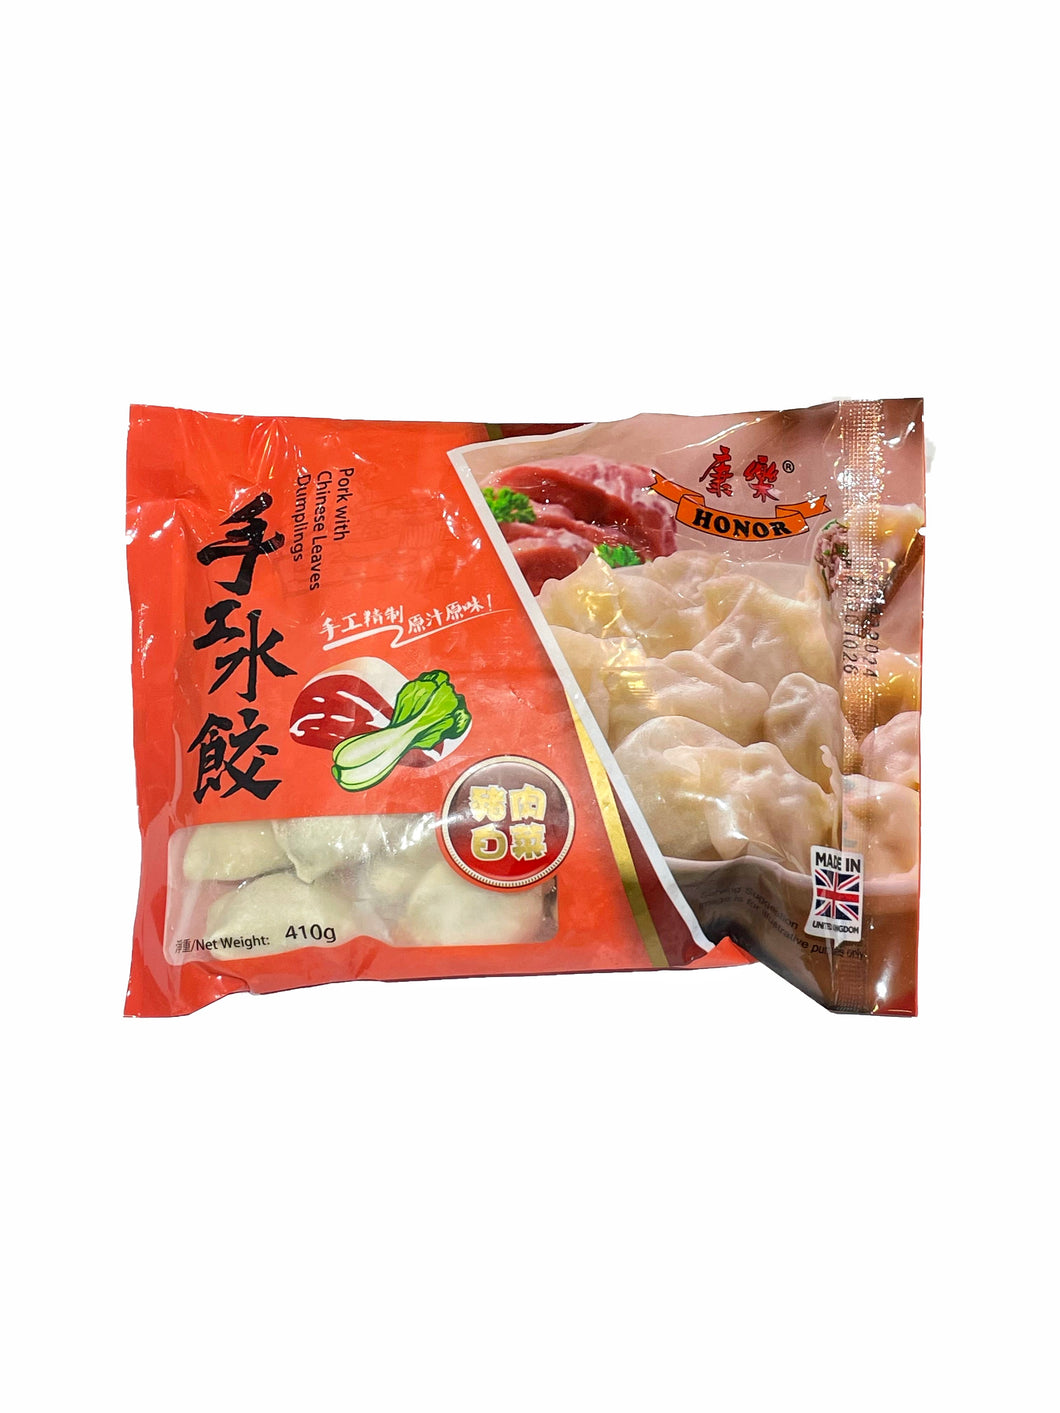 Honor Dumplings - Pork with Sichuan Spicy 410g <br> 康樂手工水餃 - 豬肉四川麻婆辣燙